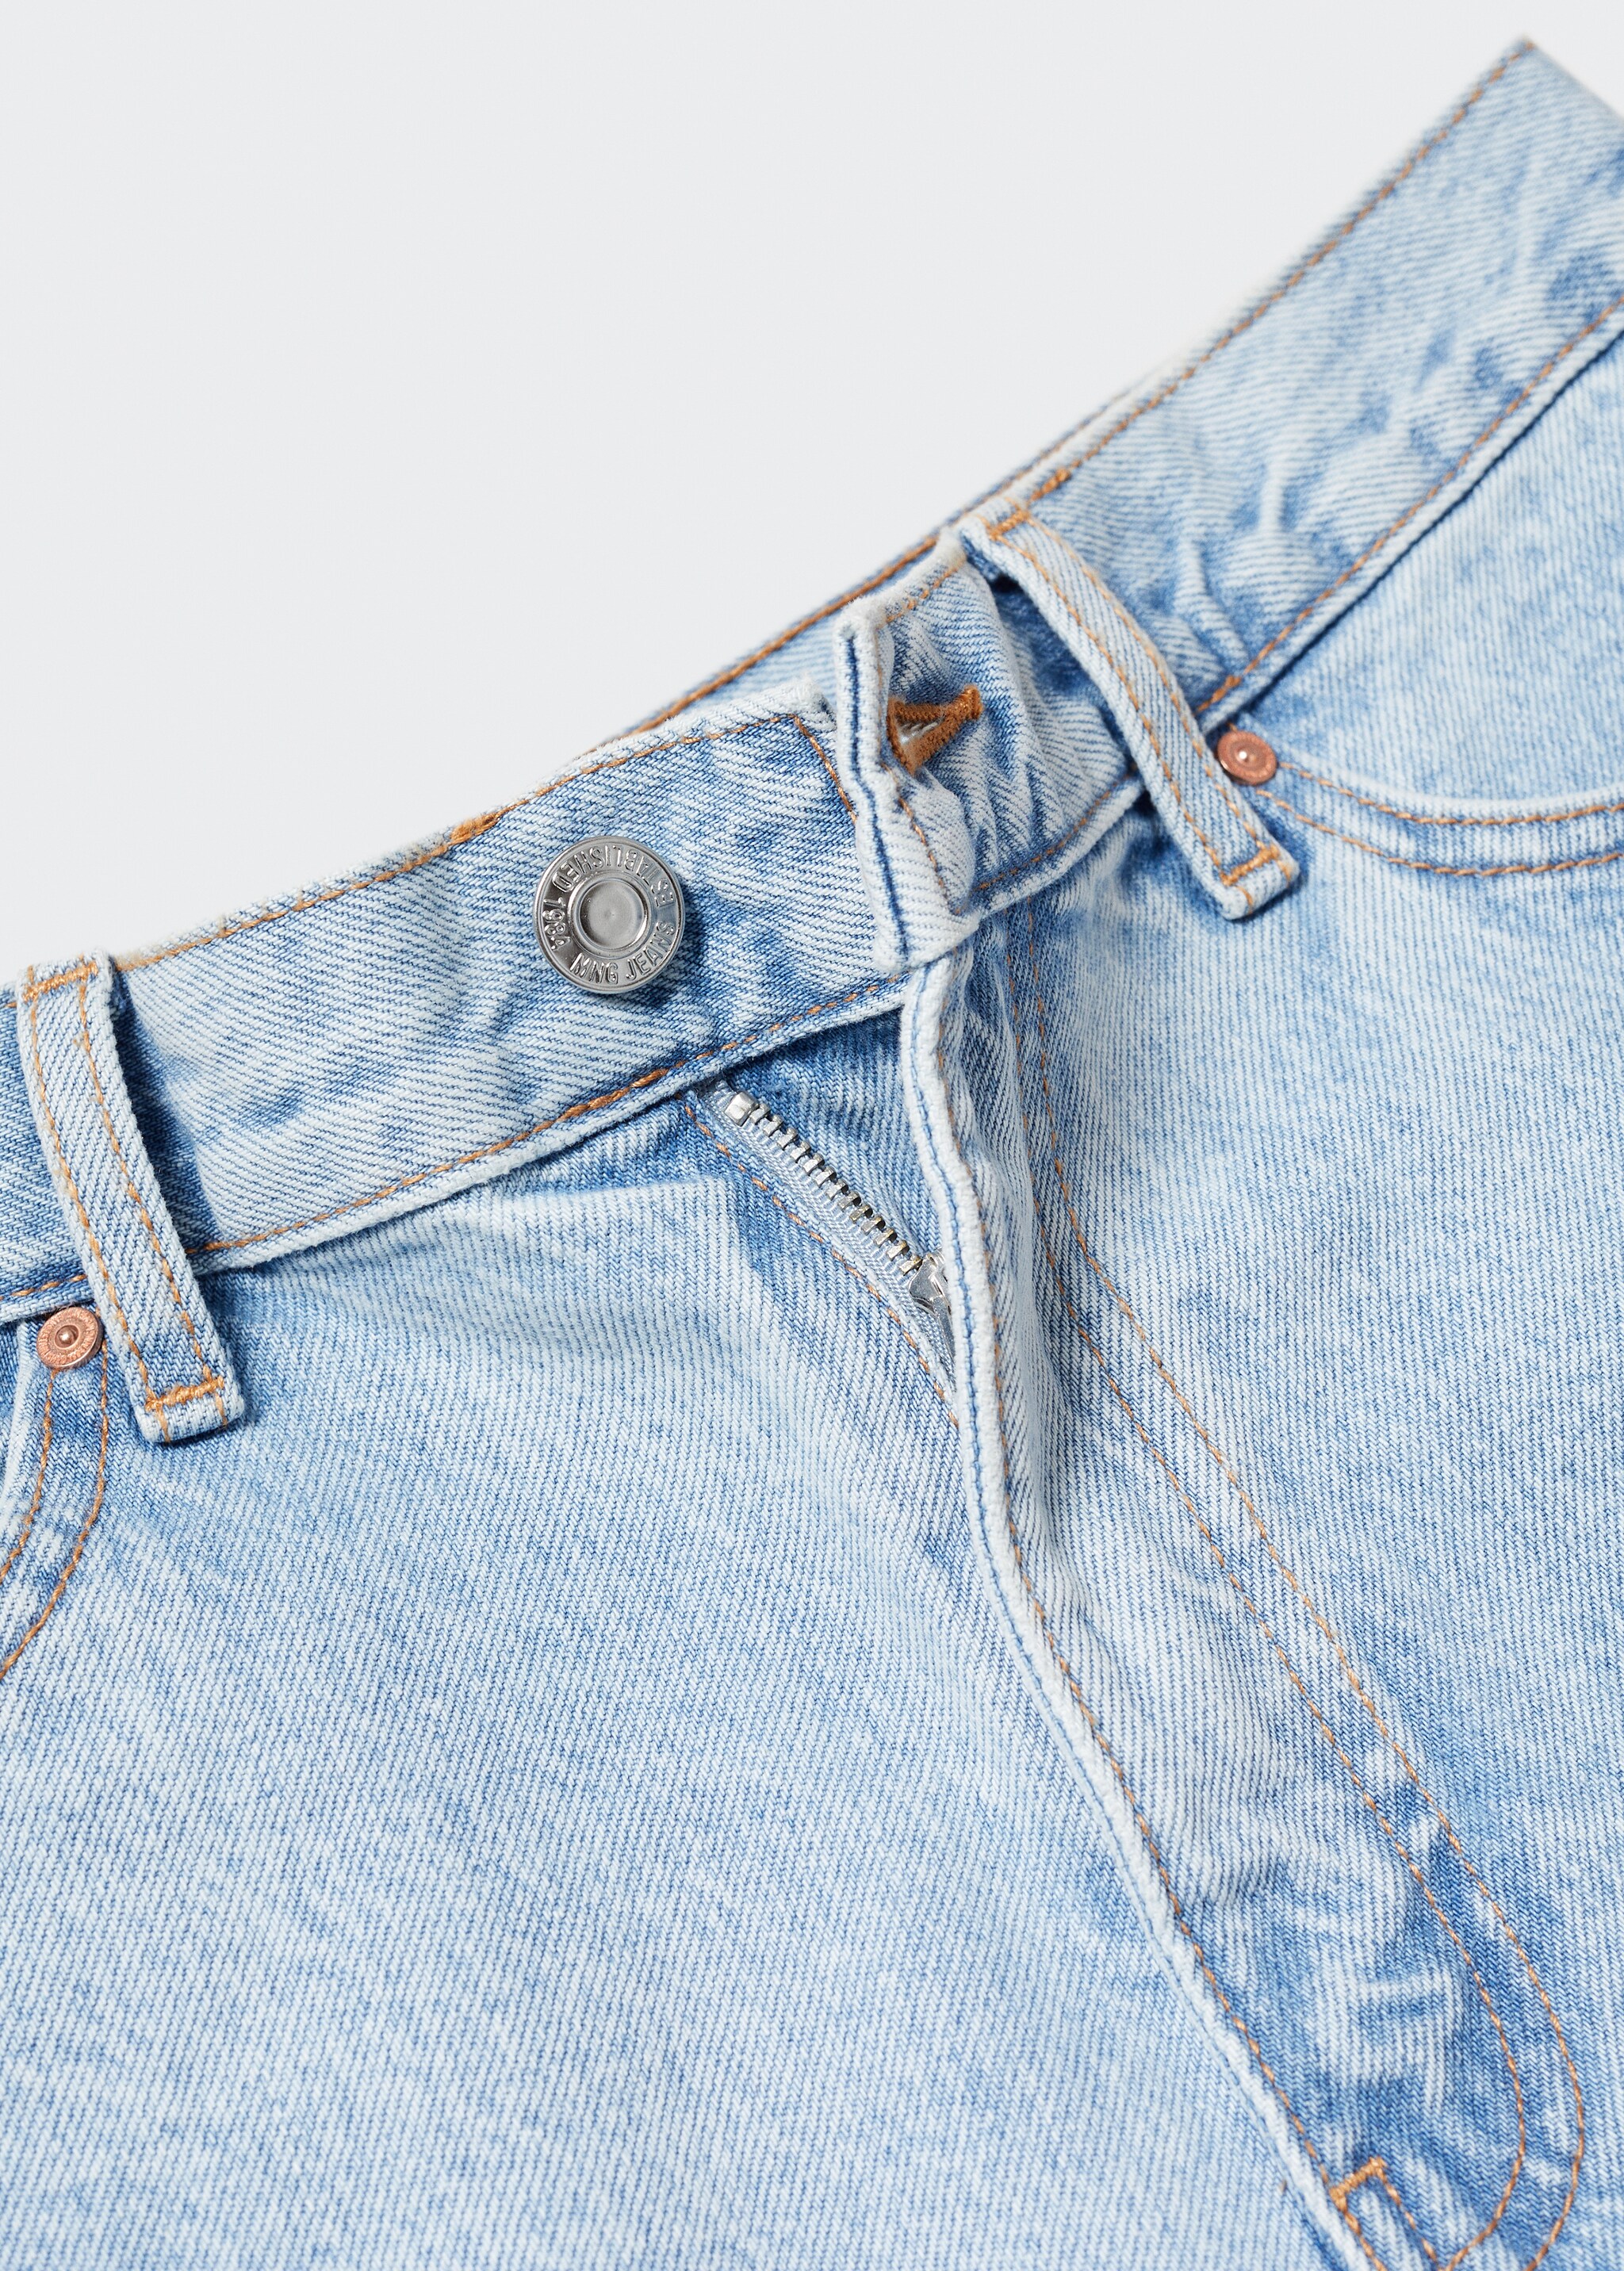 Jeans-Shorts mit hoher Taille - Detail des Artikels 8